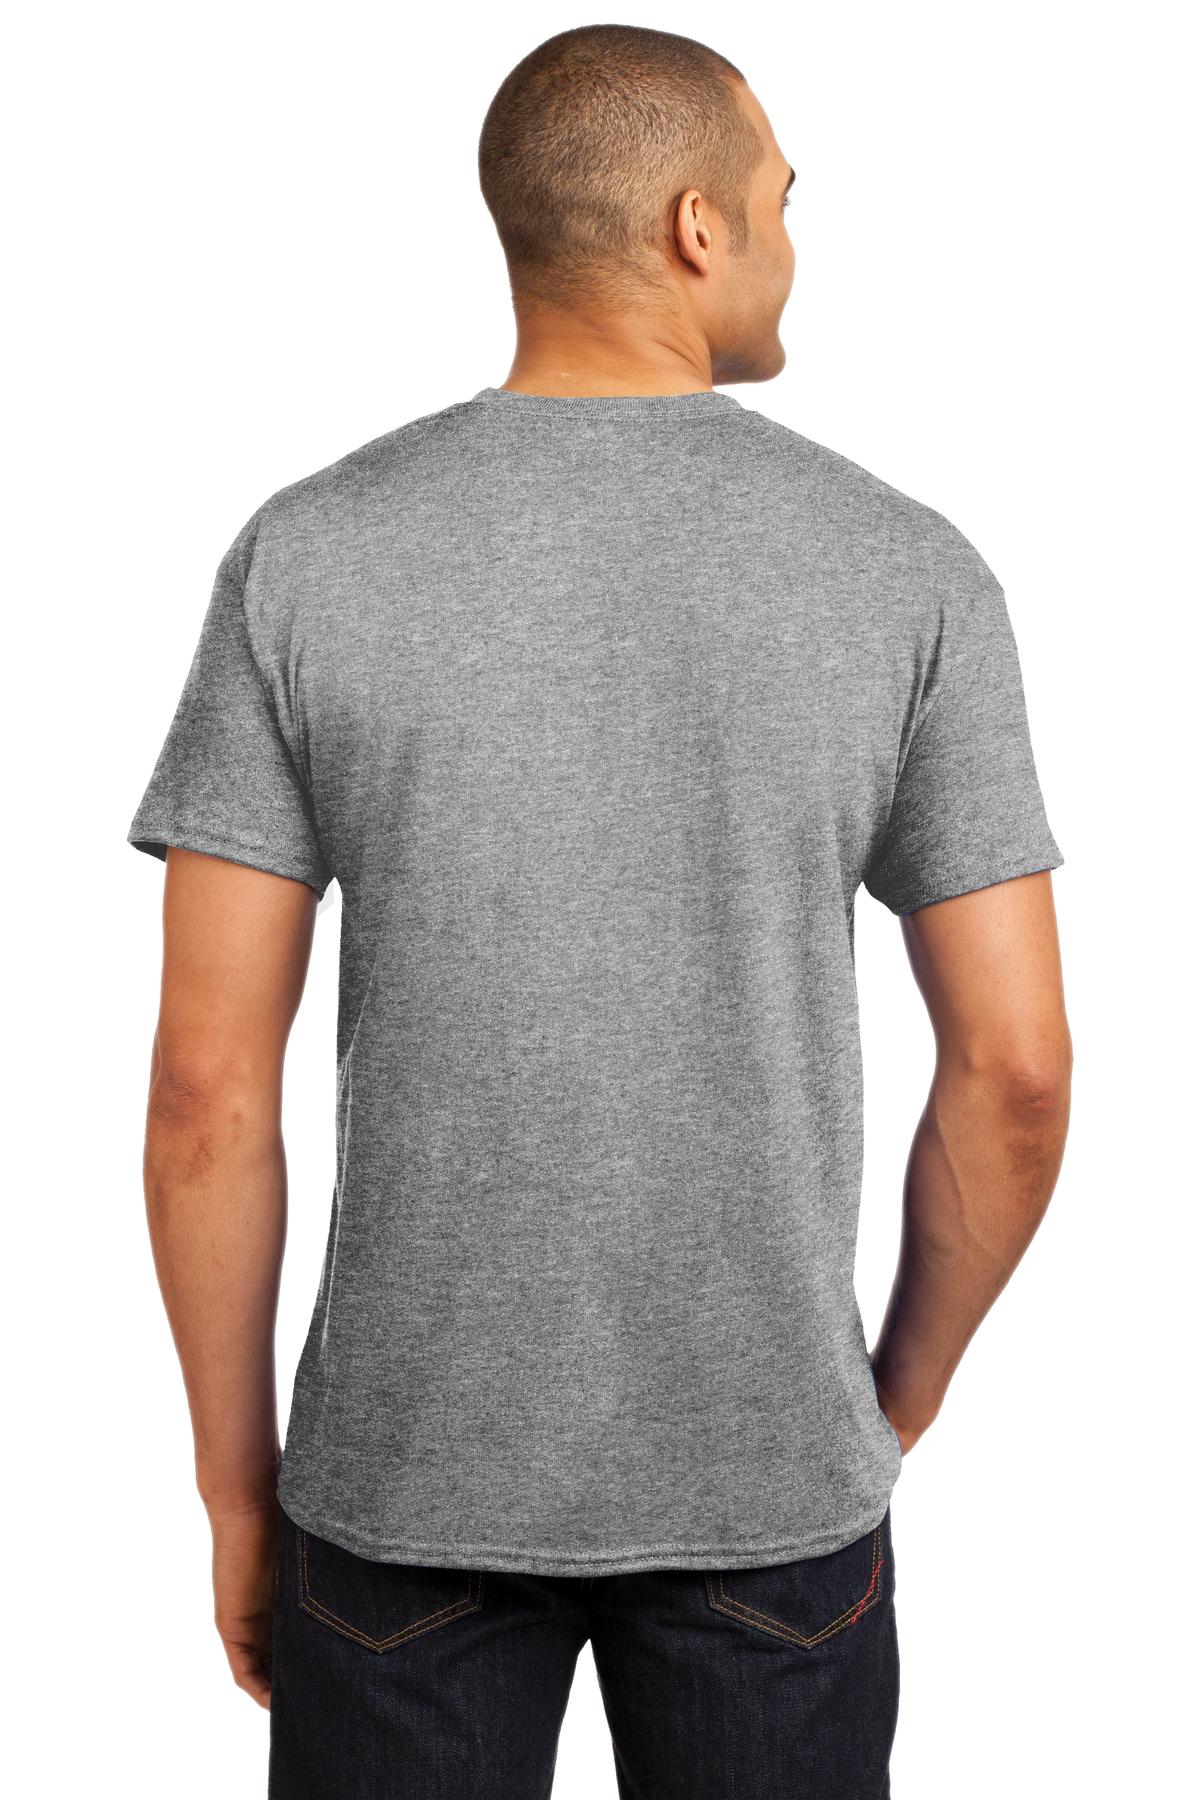 Hanes® - EcoSmart® 50/50 Cotton/Poly T-Shirt. 5170 [Light Steel] - DFW Impression